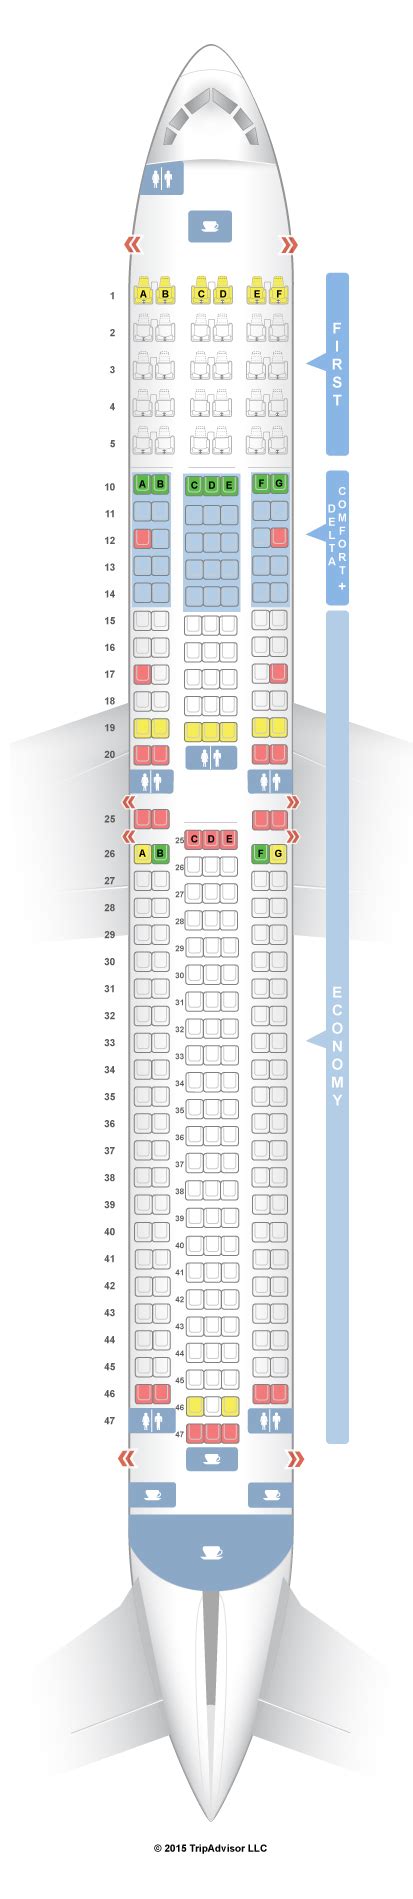 Delta Boeing Seat Map Porn Sex Picture